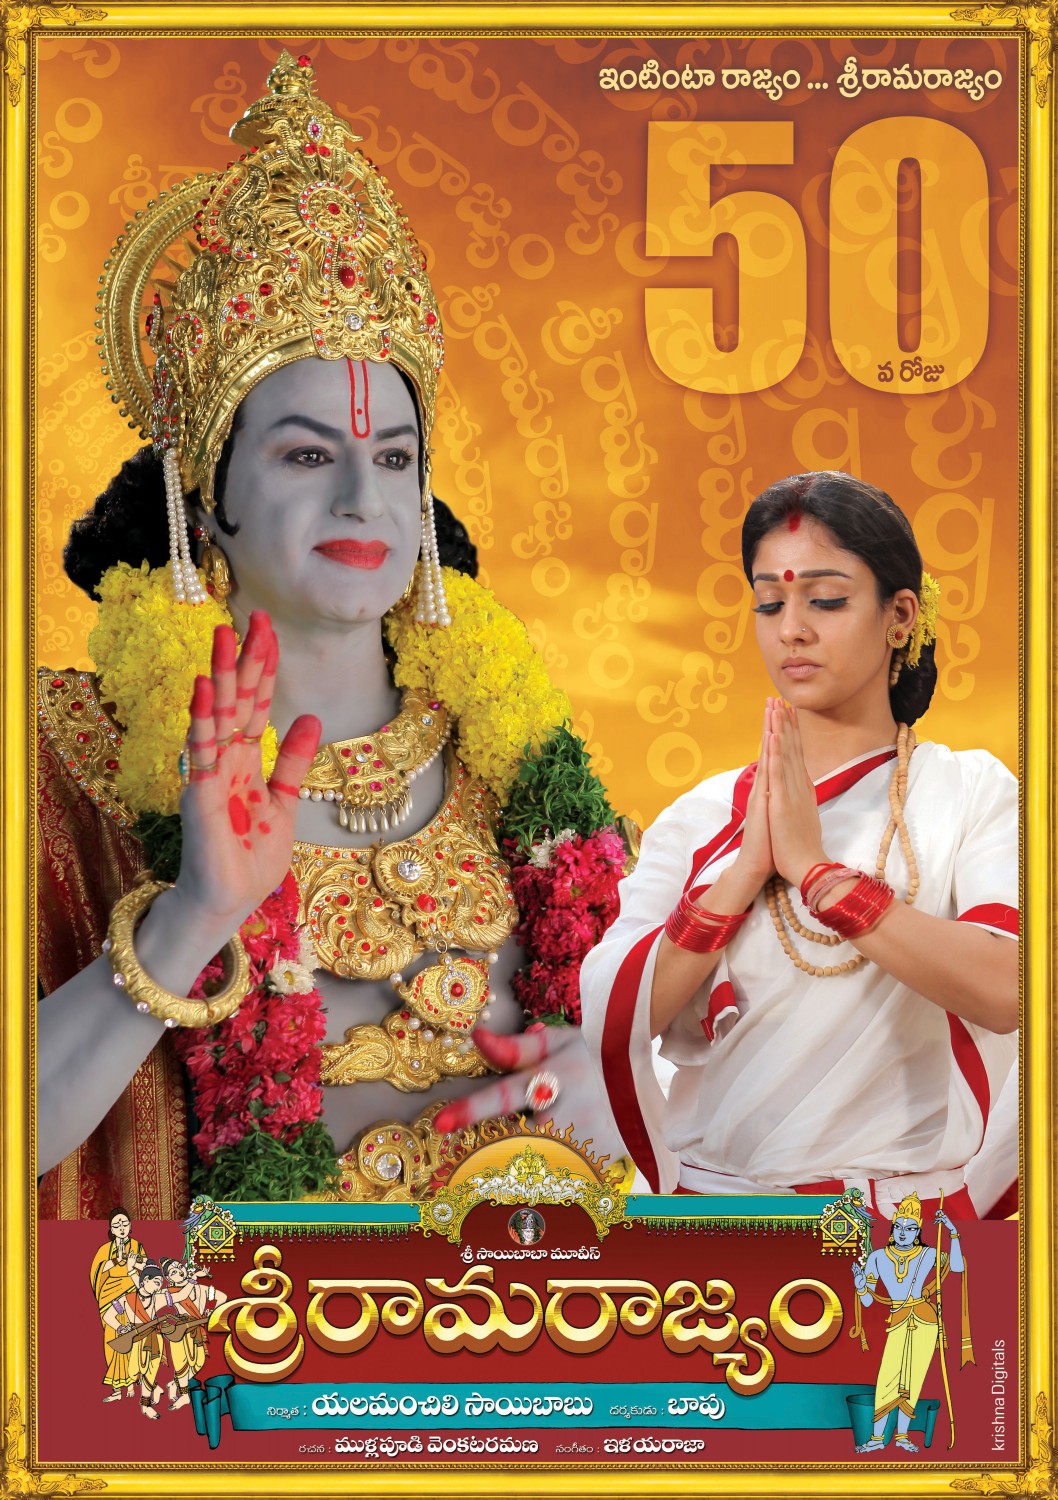 Extra Large Movie Poster Image for Sri Rama Rajyam (#9 of 10)